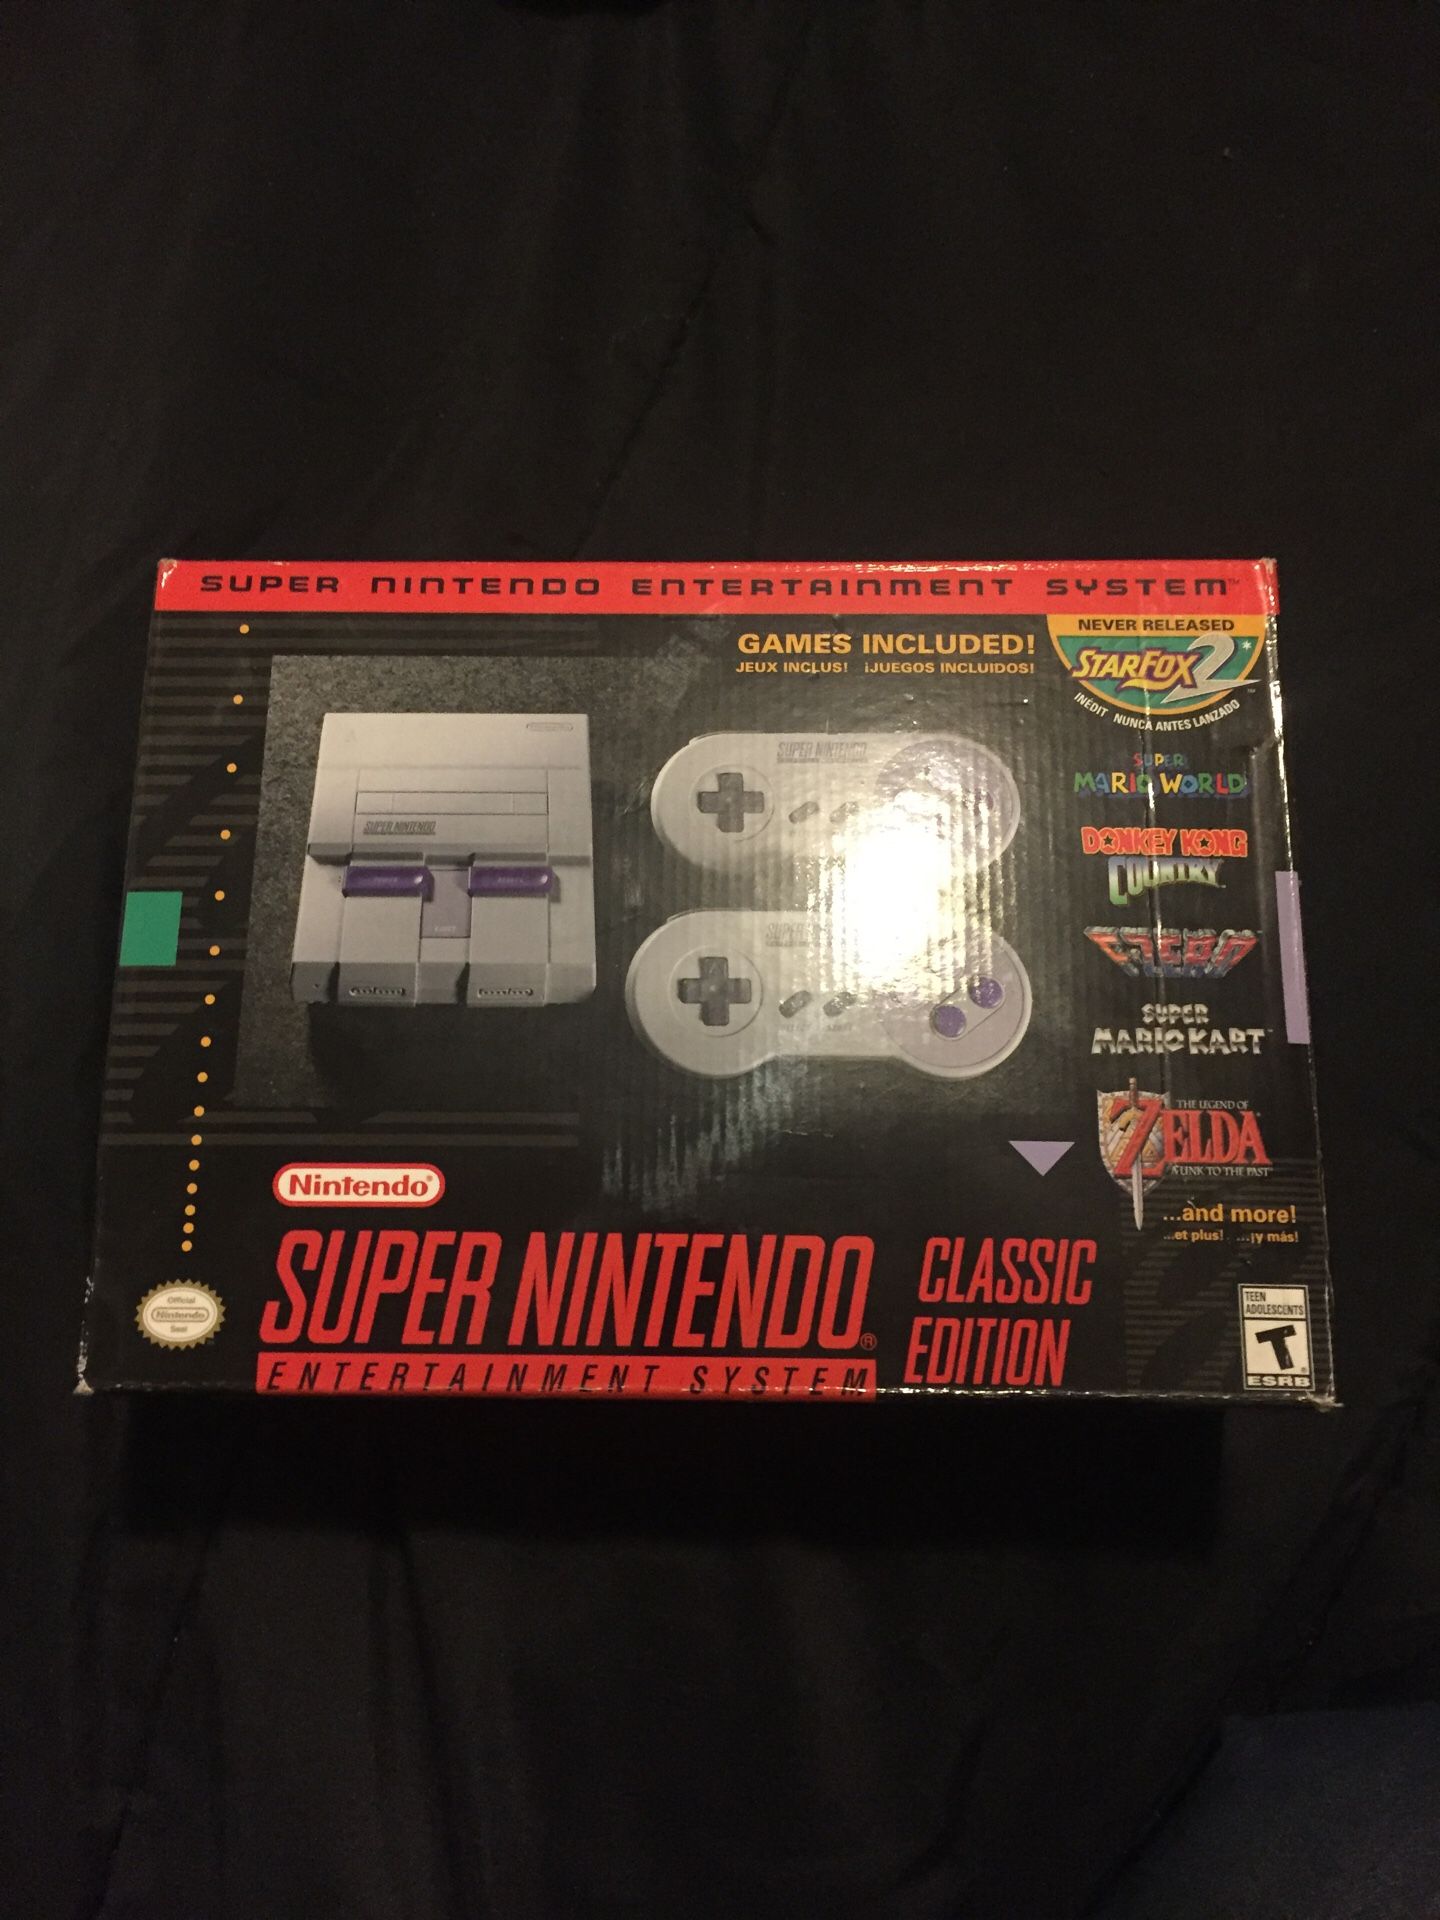 Mini Super Nintendo